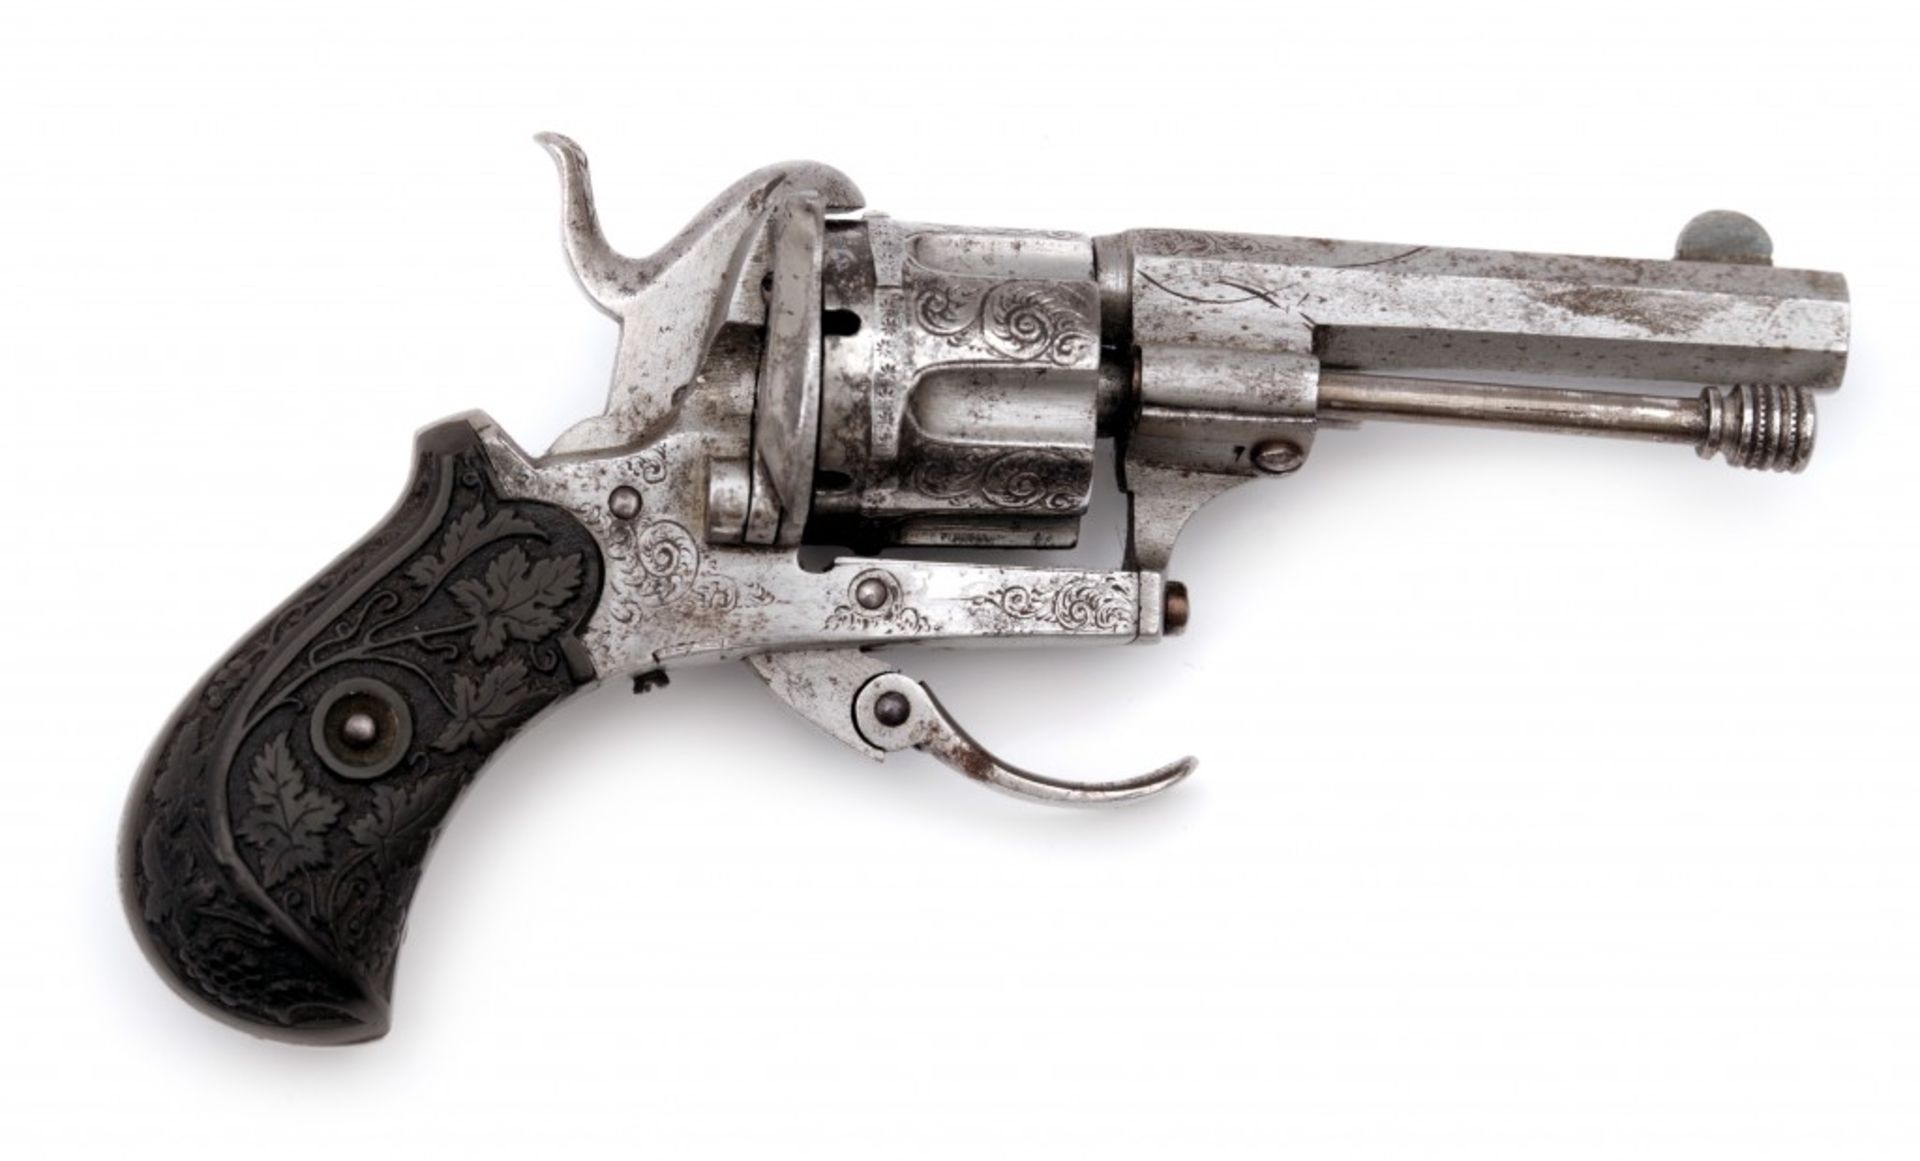 A miniature pinfire revolver